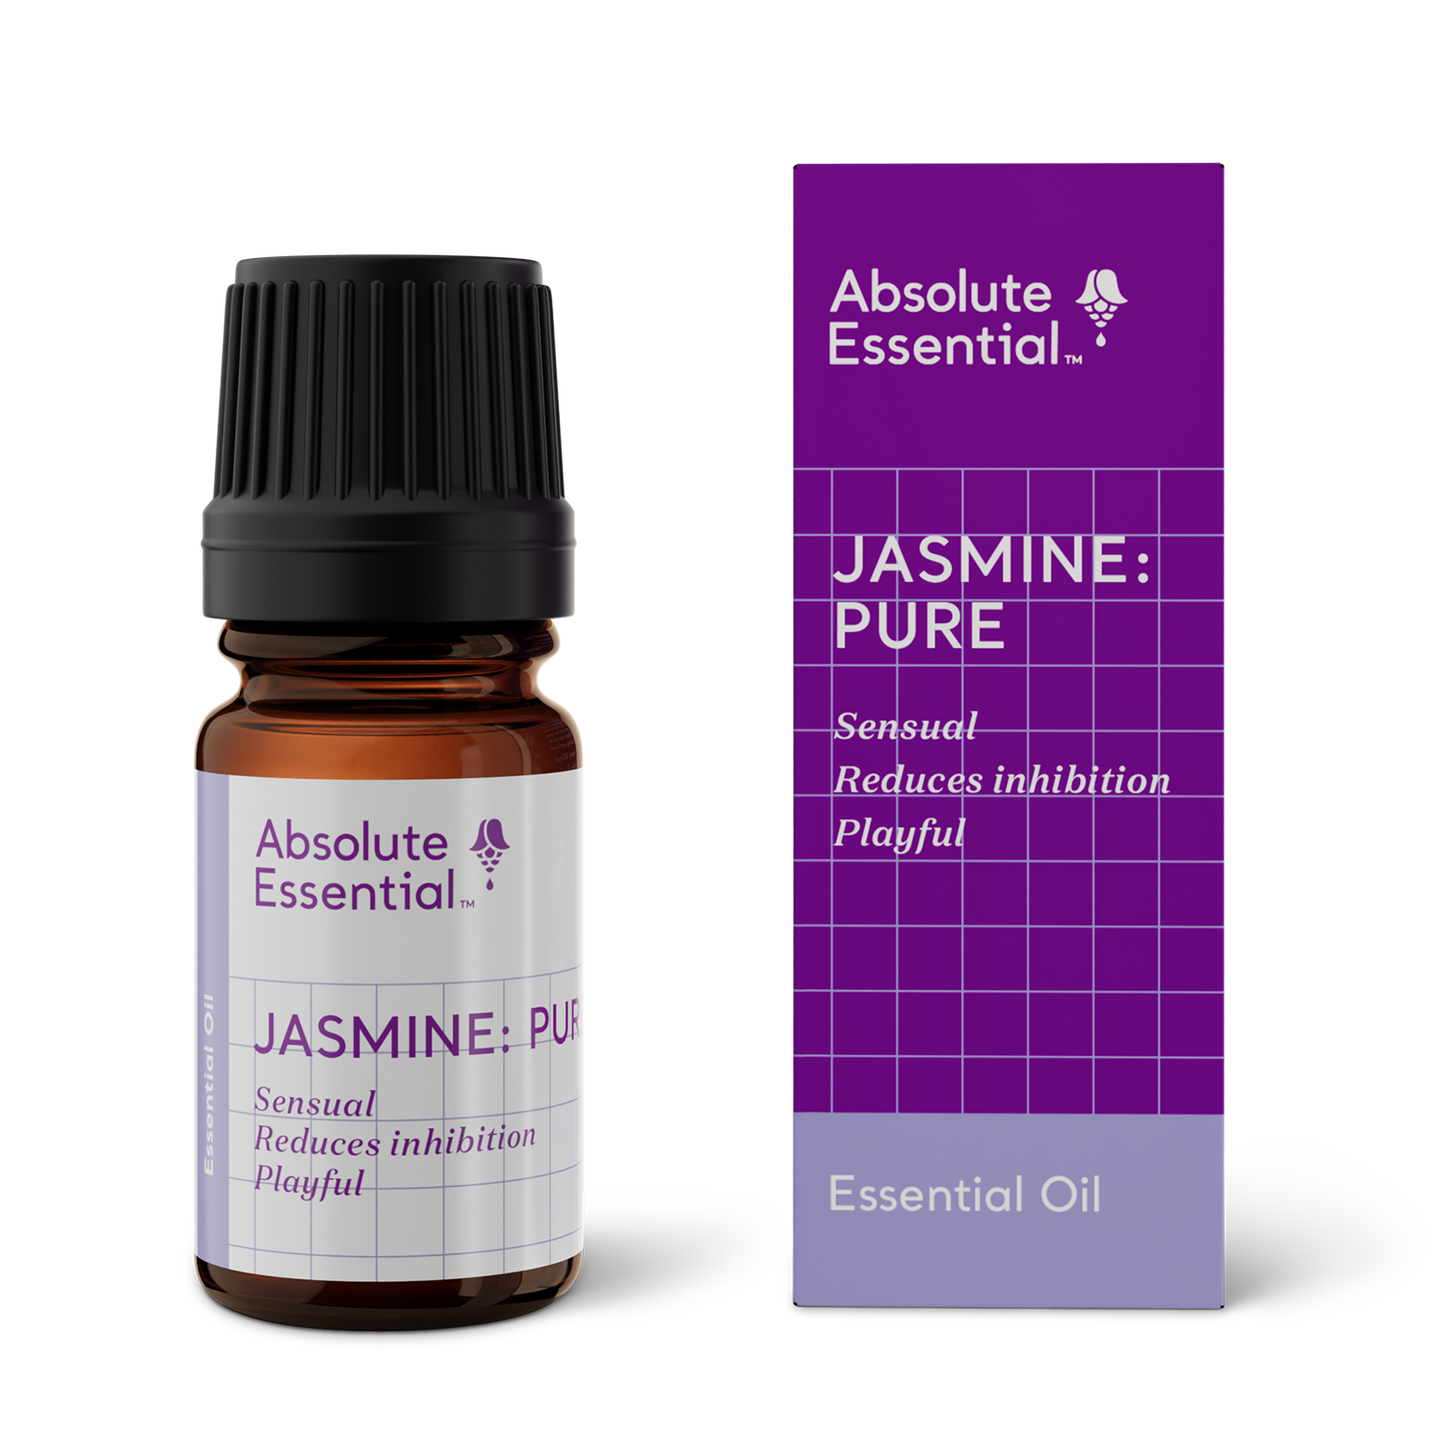 Jasmine Essential Oil, Pure Jasmine Essence Oil, Premium Grade Jasmium Oil,  10ml 0.33 fl oz, Aromatherapy Oil for Home Fragrance and Cosmetics